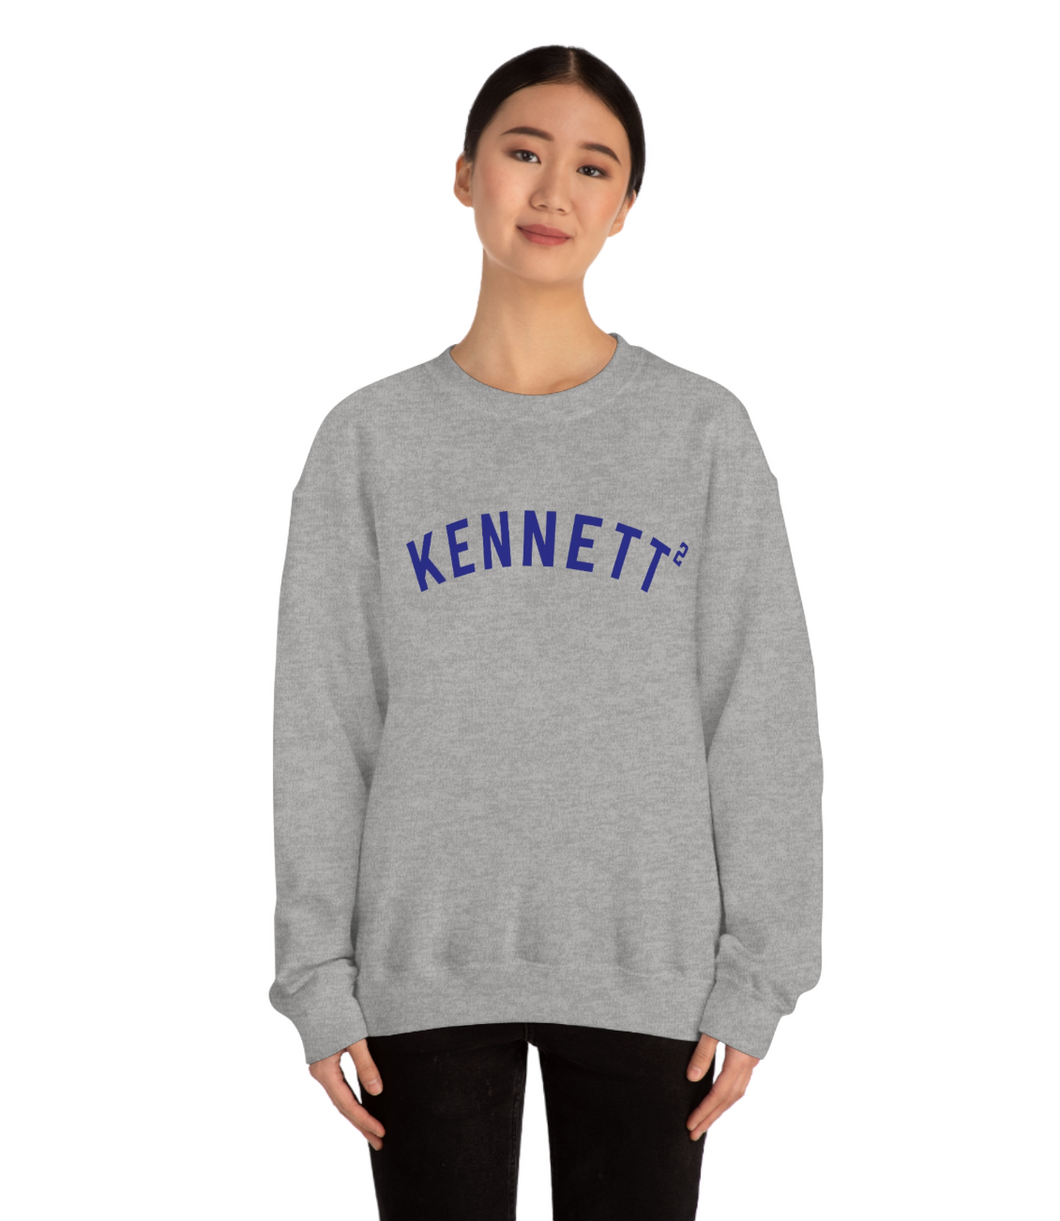 Kennett 2 Gray Crewneck Sweatshirt